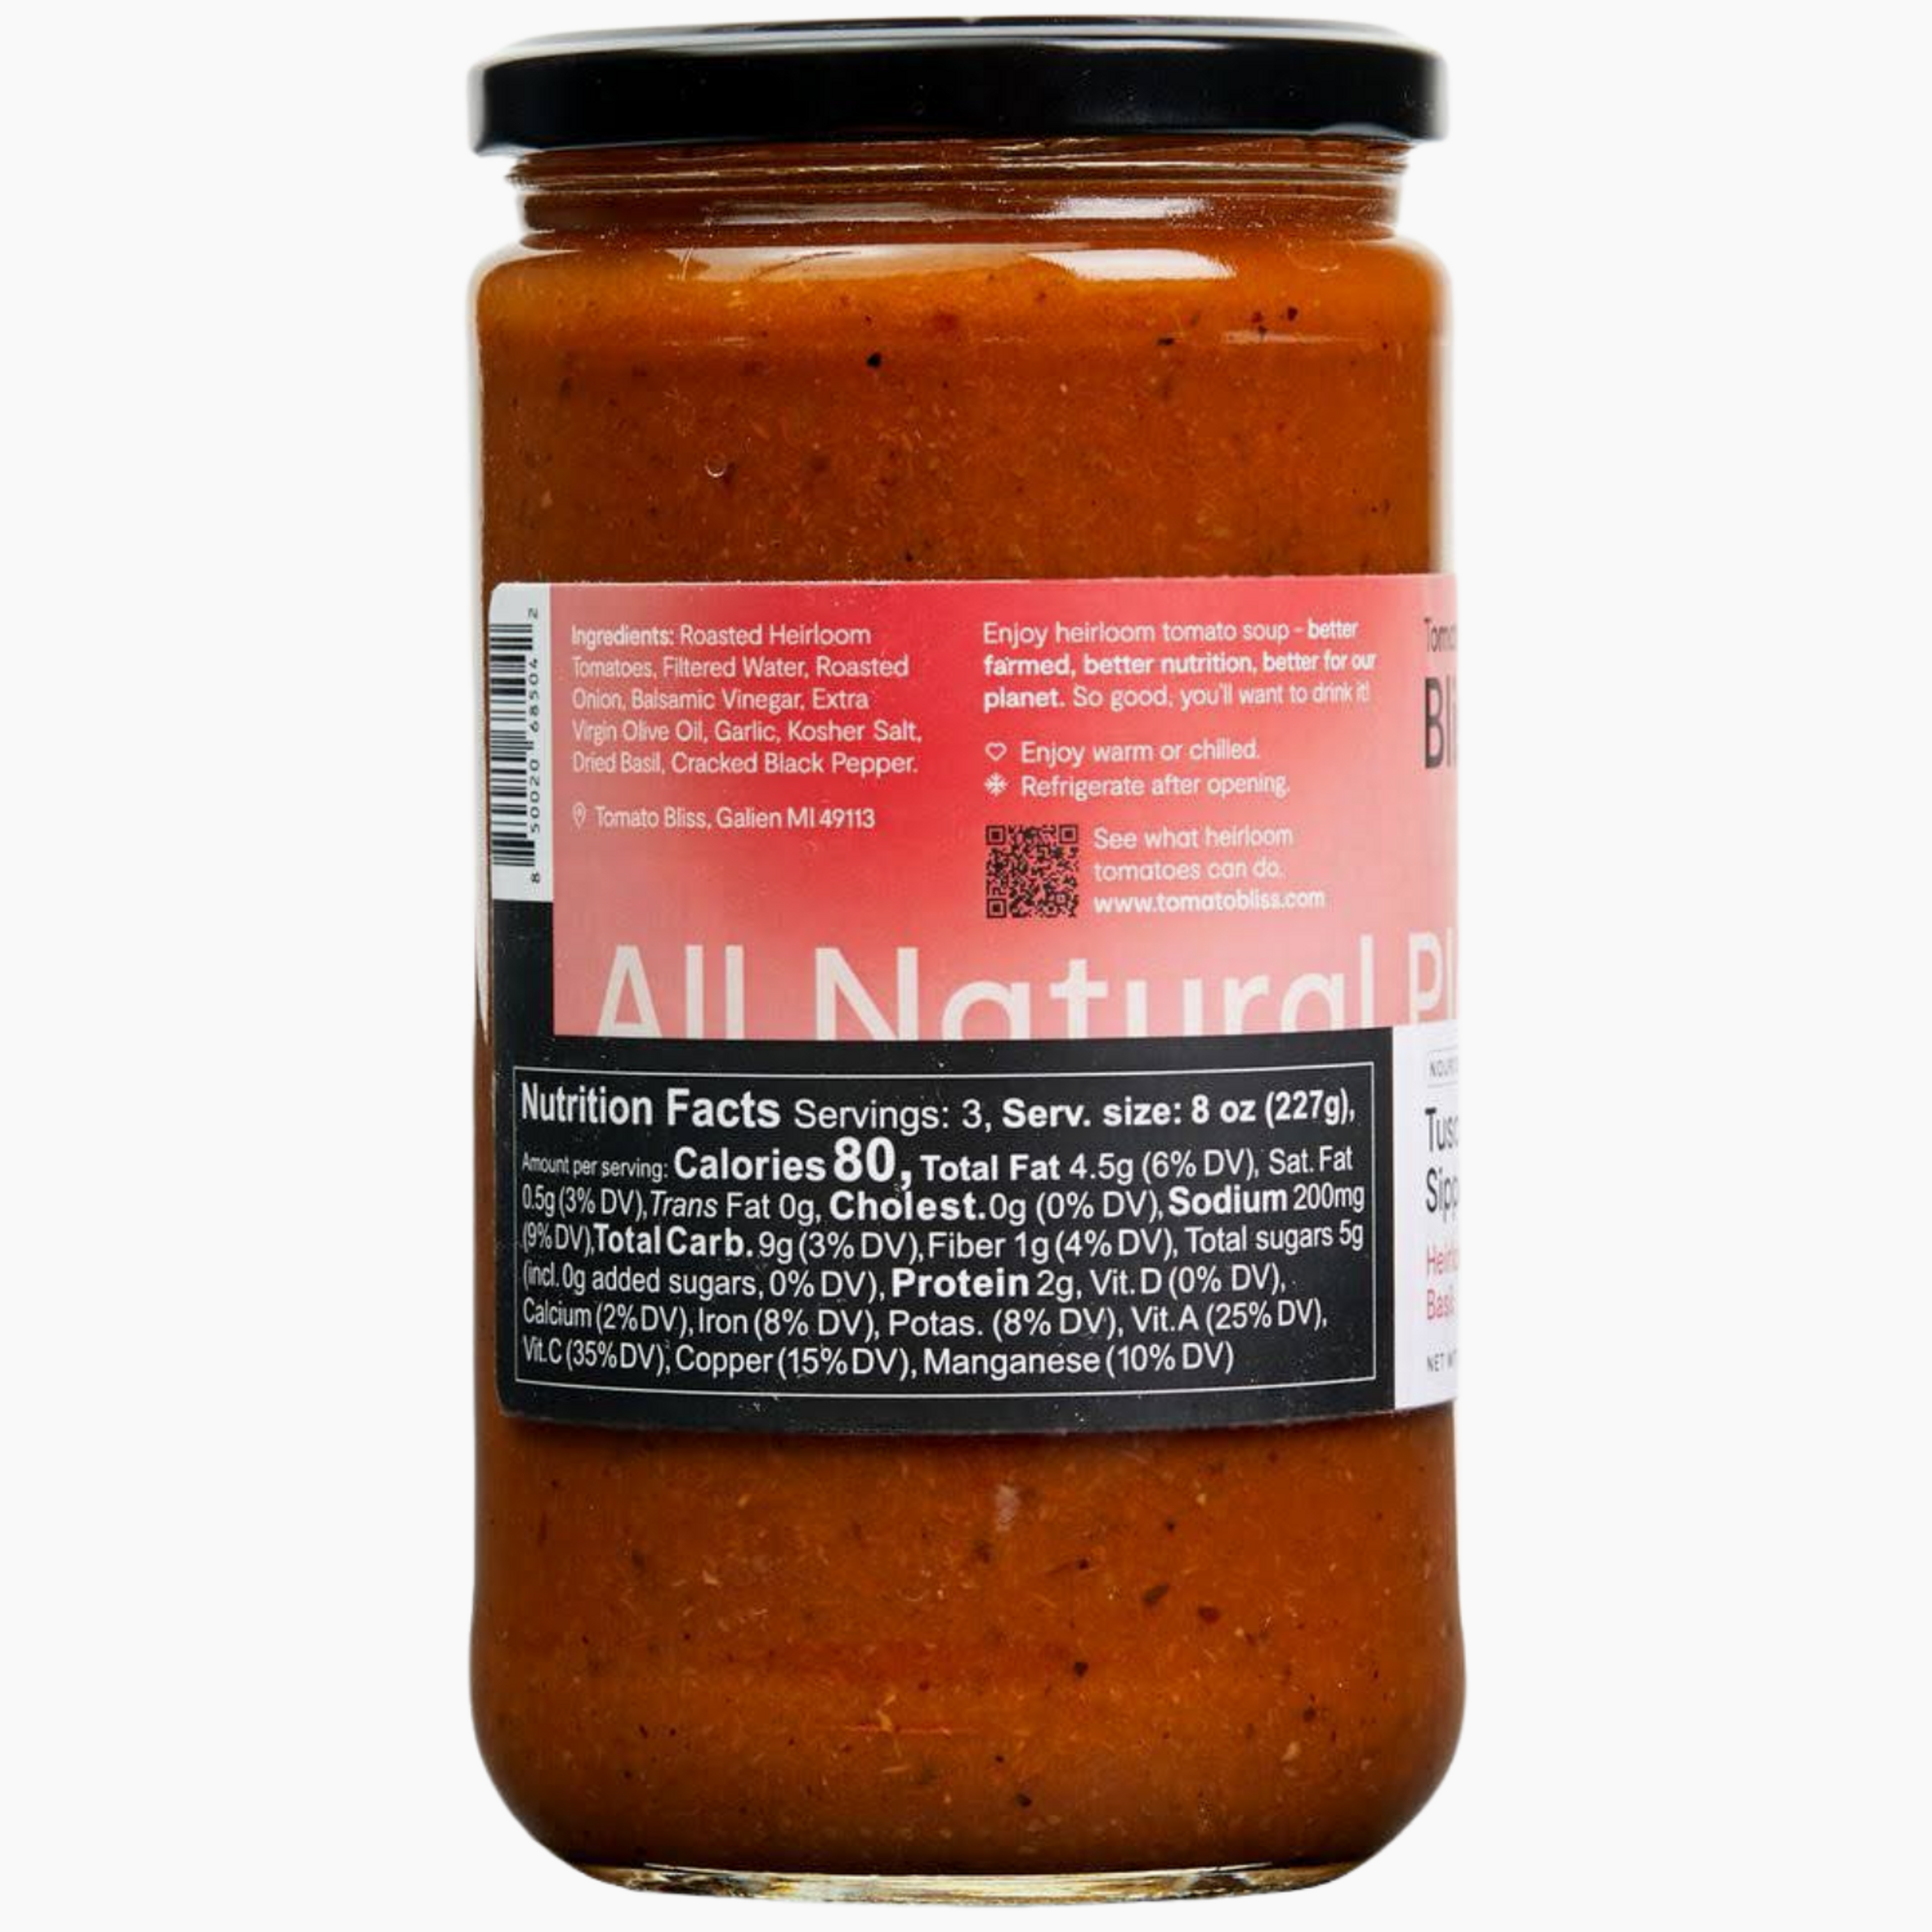 Heirloom Tomato Soup Sampler 4-Pack Gift Set (24 oz)